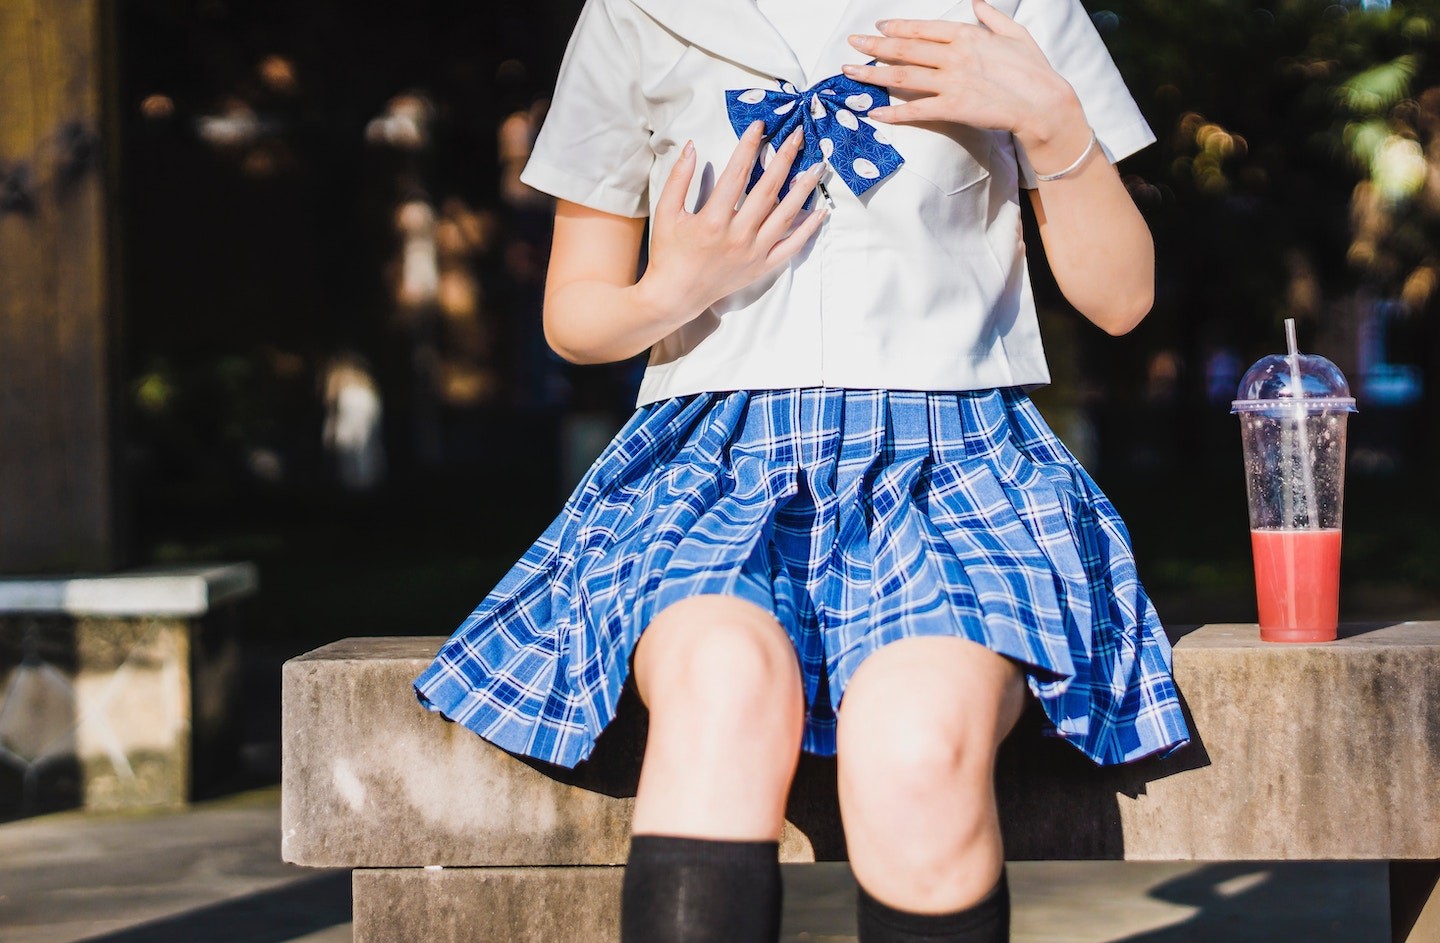 Why do most schoolgirl women use white underwear? - Quora